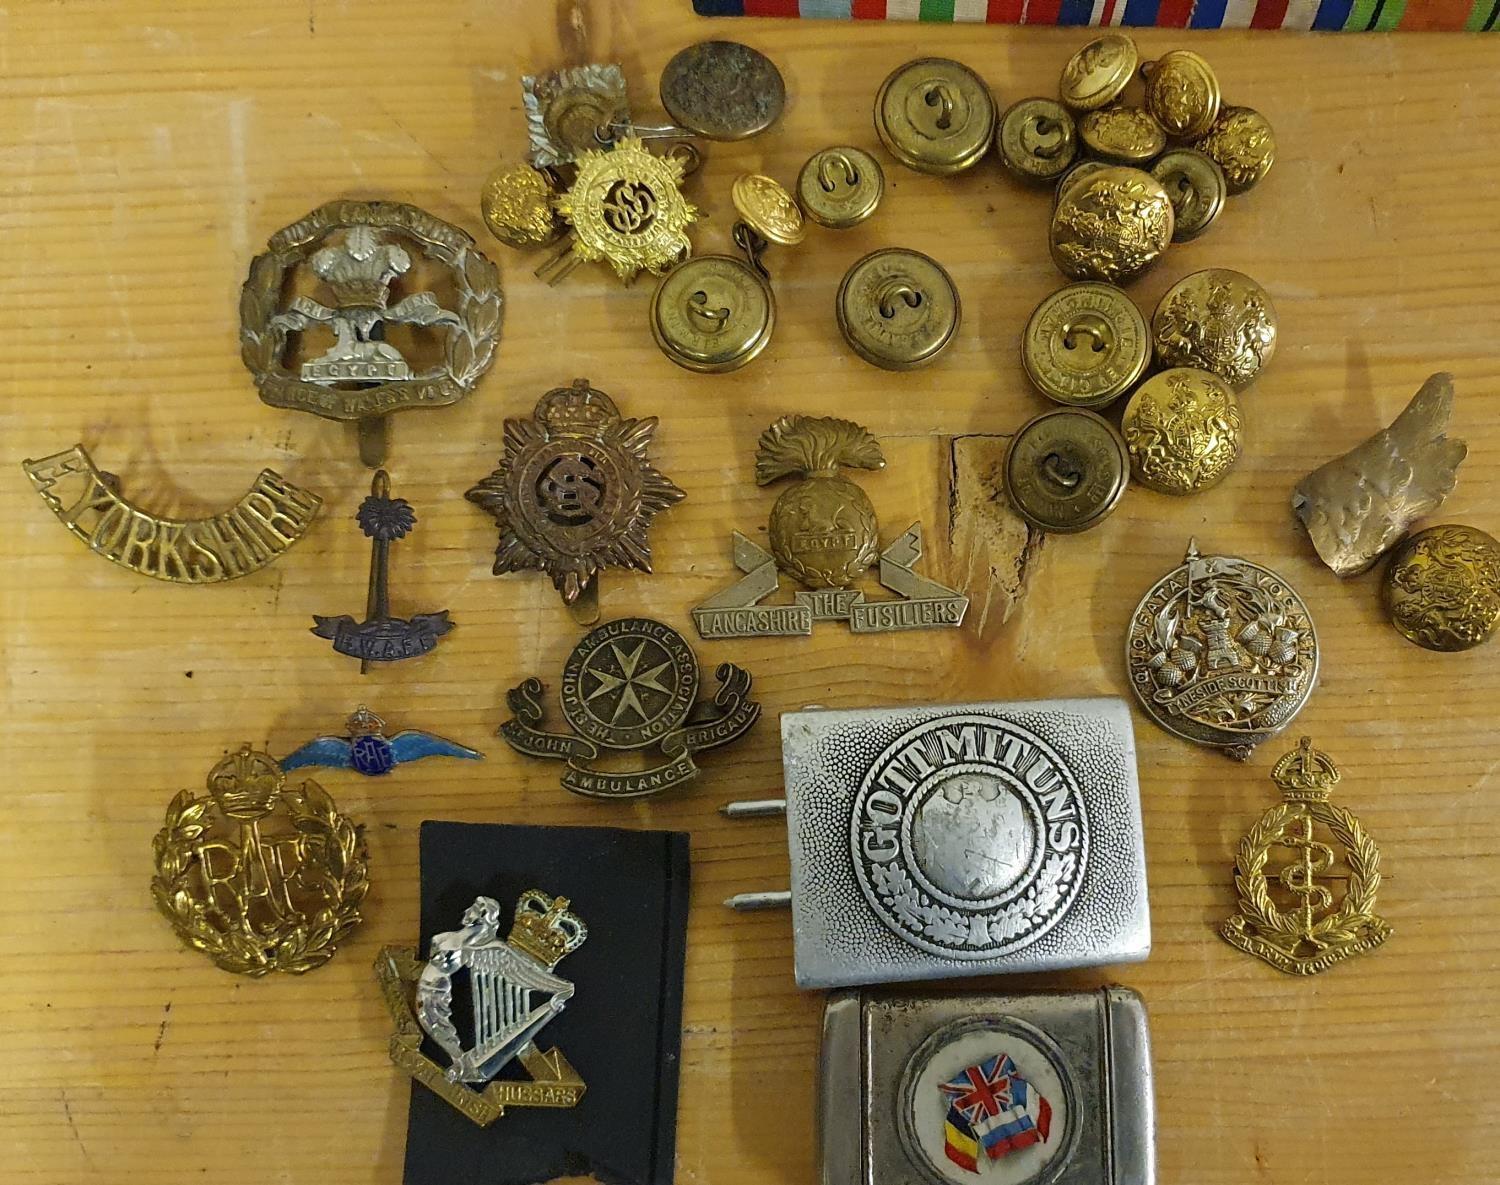 A German Gott Mit Uns belt buckle, worn, various cap badges and buttons.